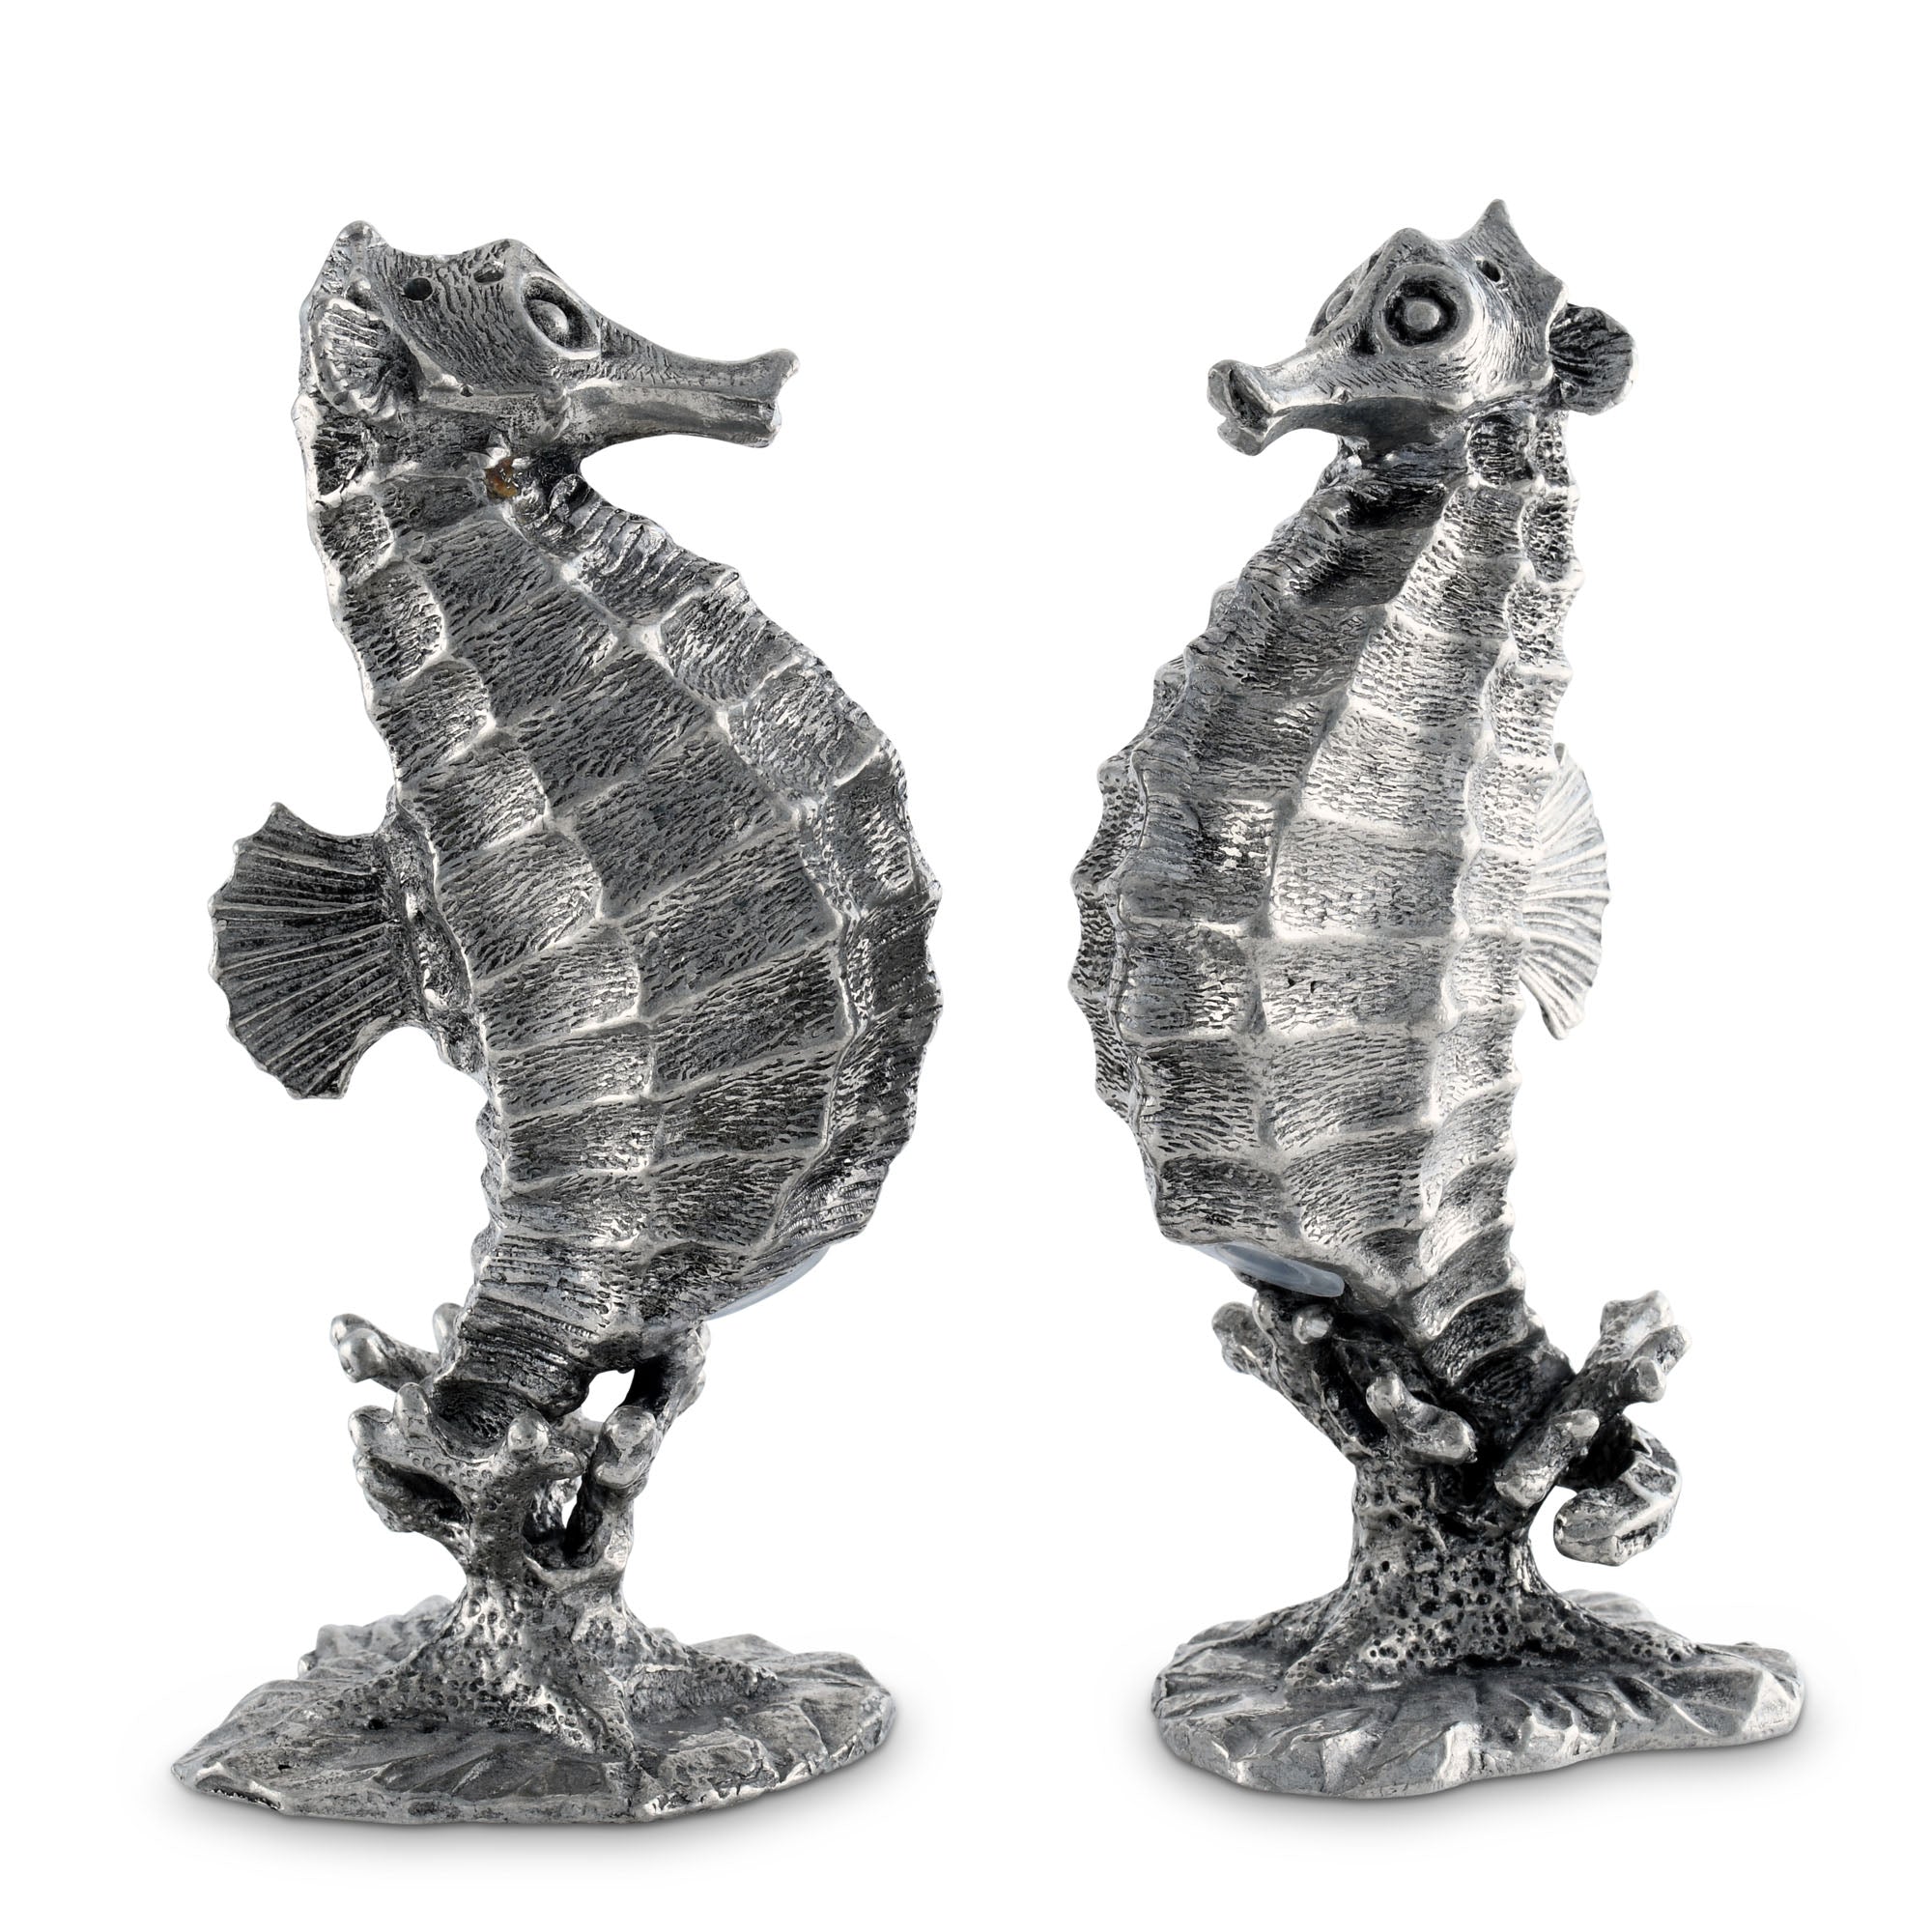 Vagabond House Pewter Seahorses Salt & Pepper Set Product Image